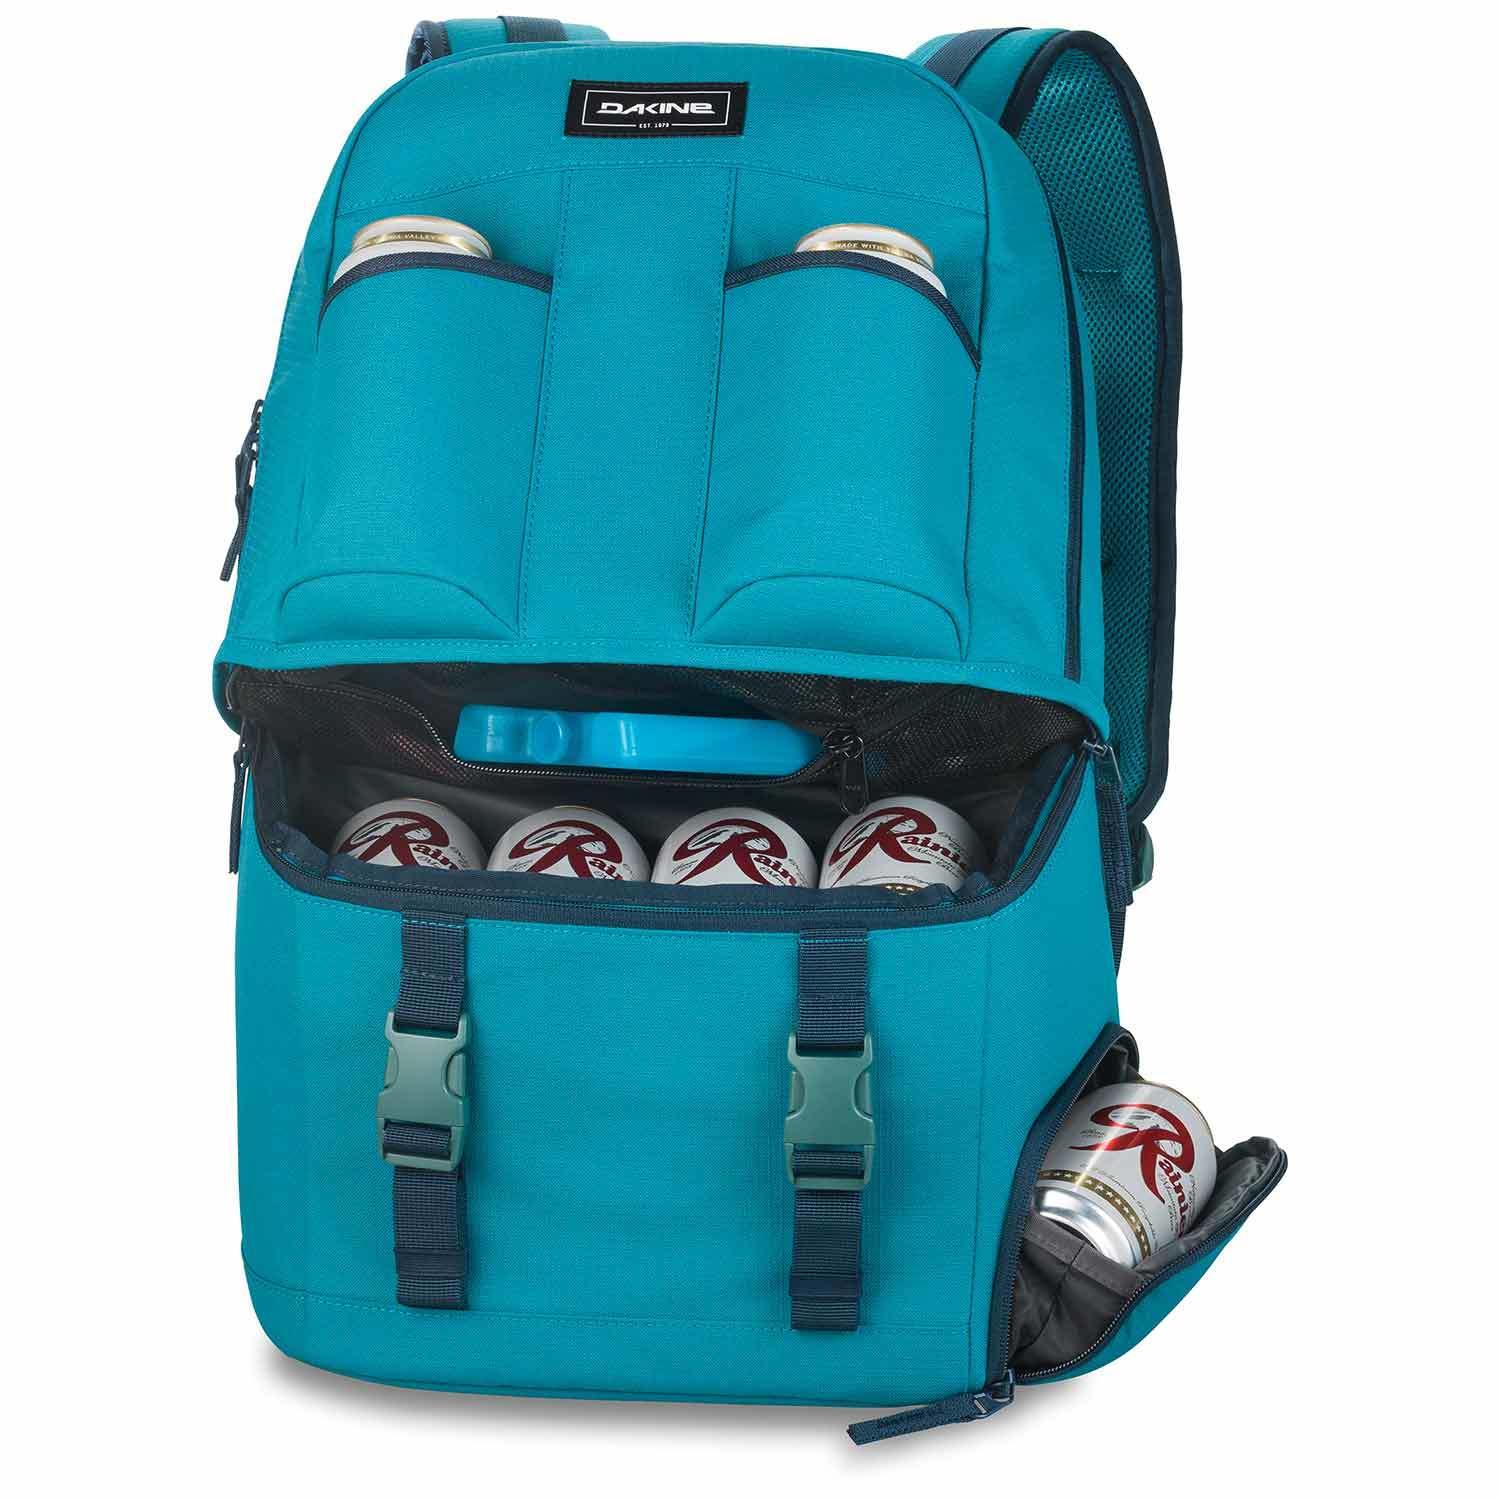 28L Party Pack Backpack Cooler